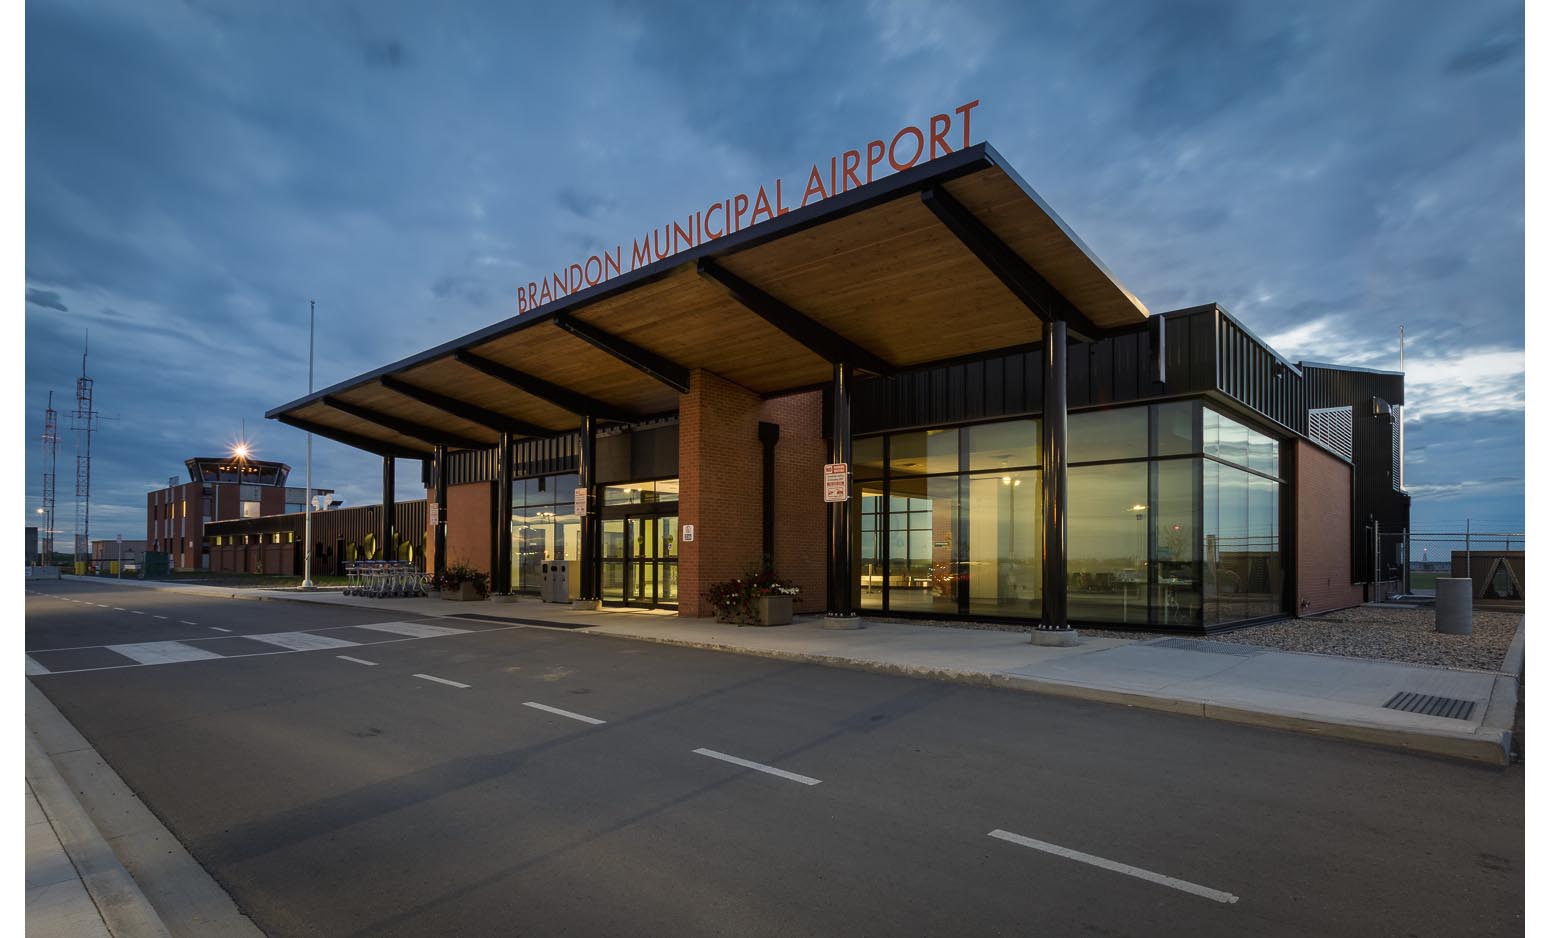  Brandon Municipal Airport, exterior photo of building at dusk / Photo:  Lindsay Reid  